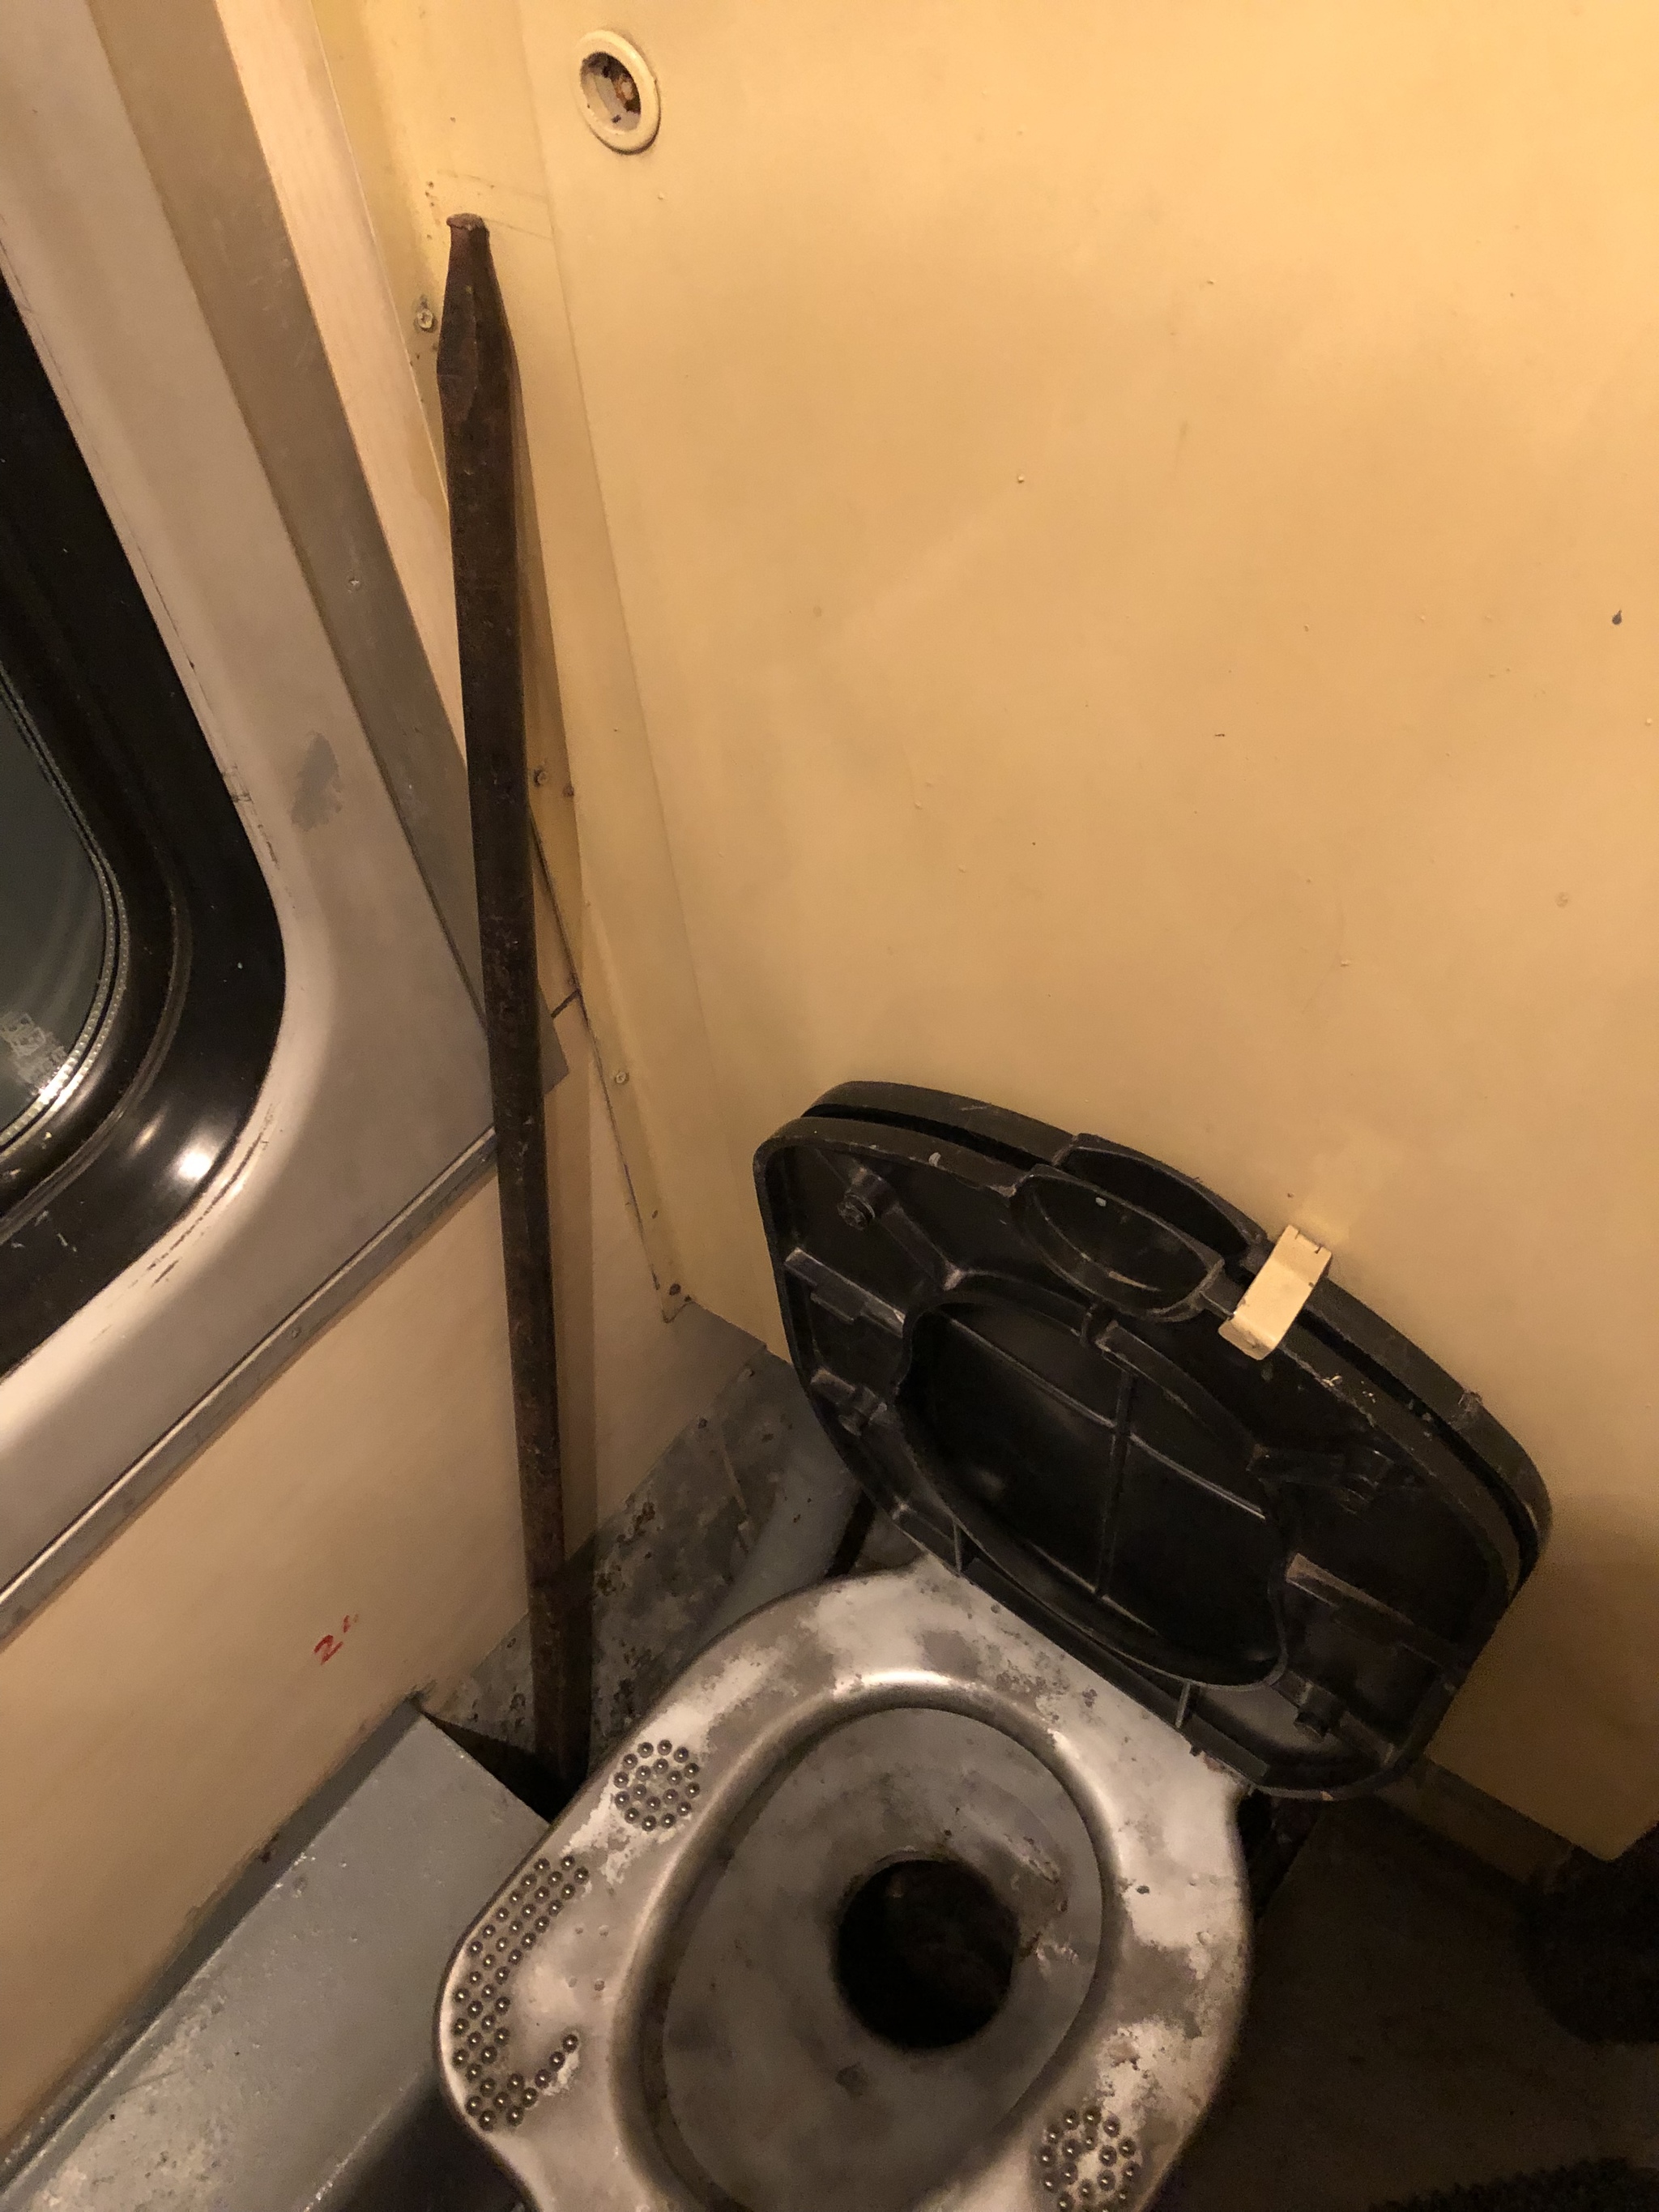 Temptation - My, Scrap in the train toilet, Scrap, A train, Temptation